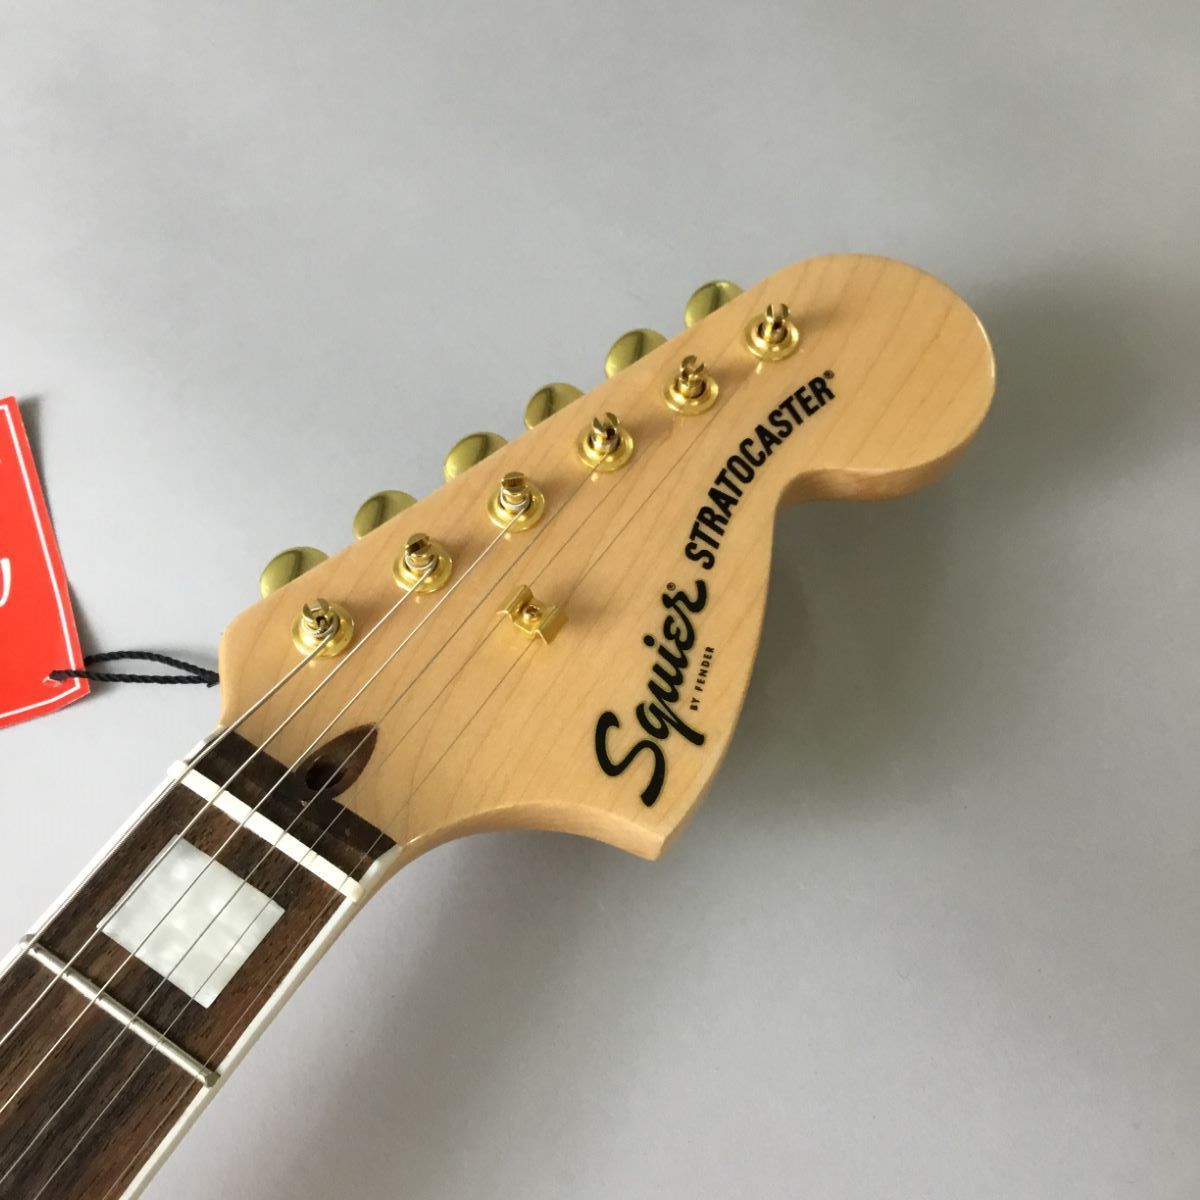 Squier by Fender Delux ストラト 新品同様 白 ゴールド - エレキギター